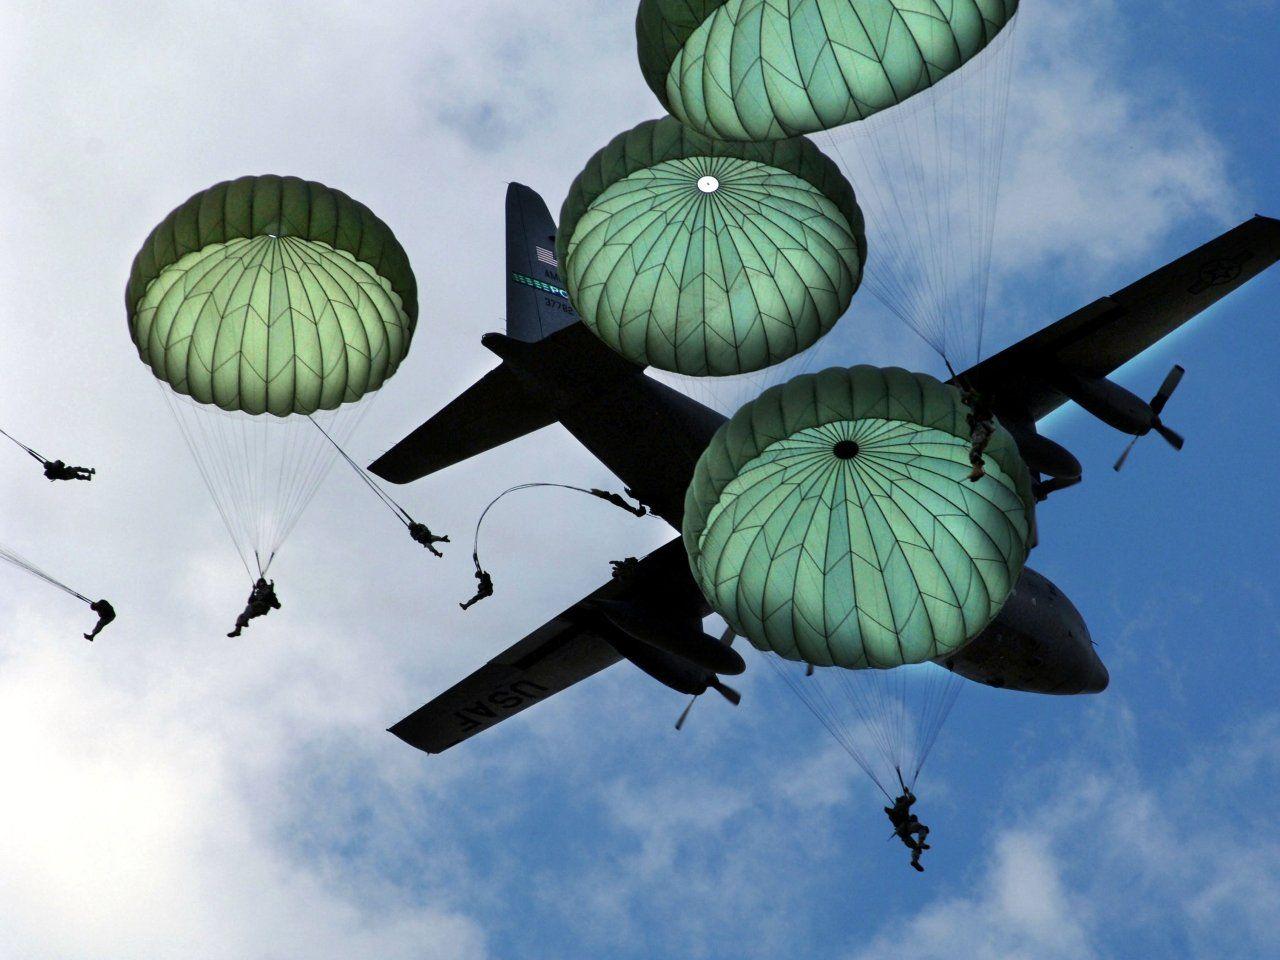 parachute photo gallery. Parachute Wallpaper. Military Wallpaper